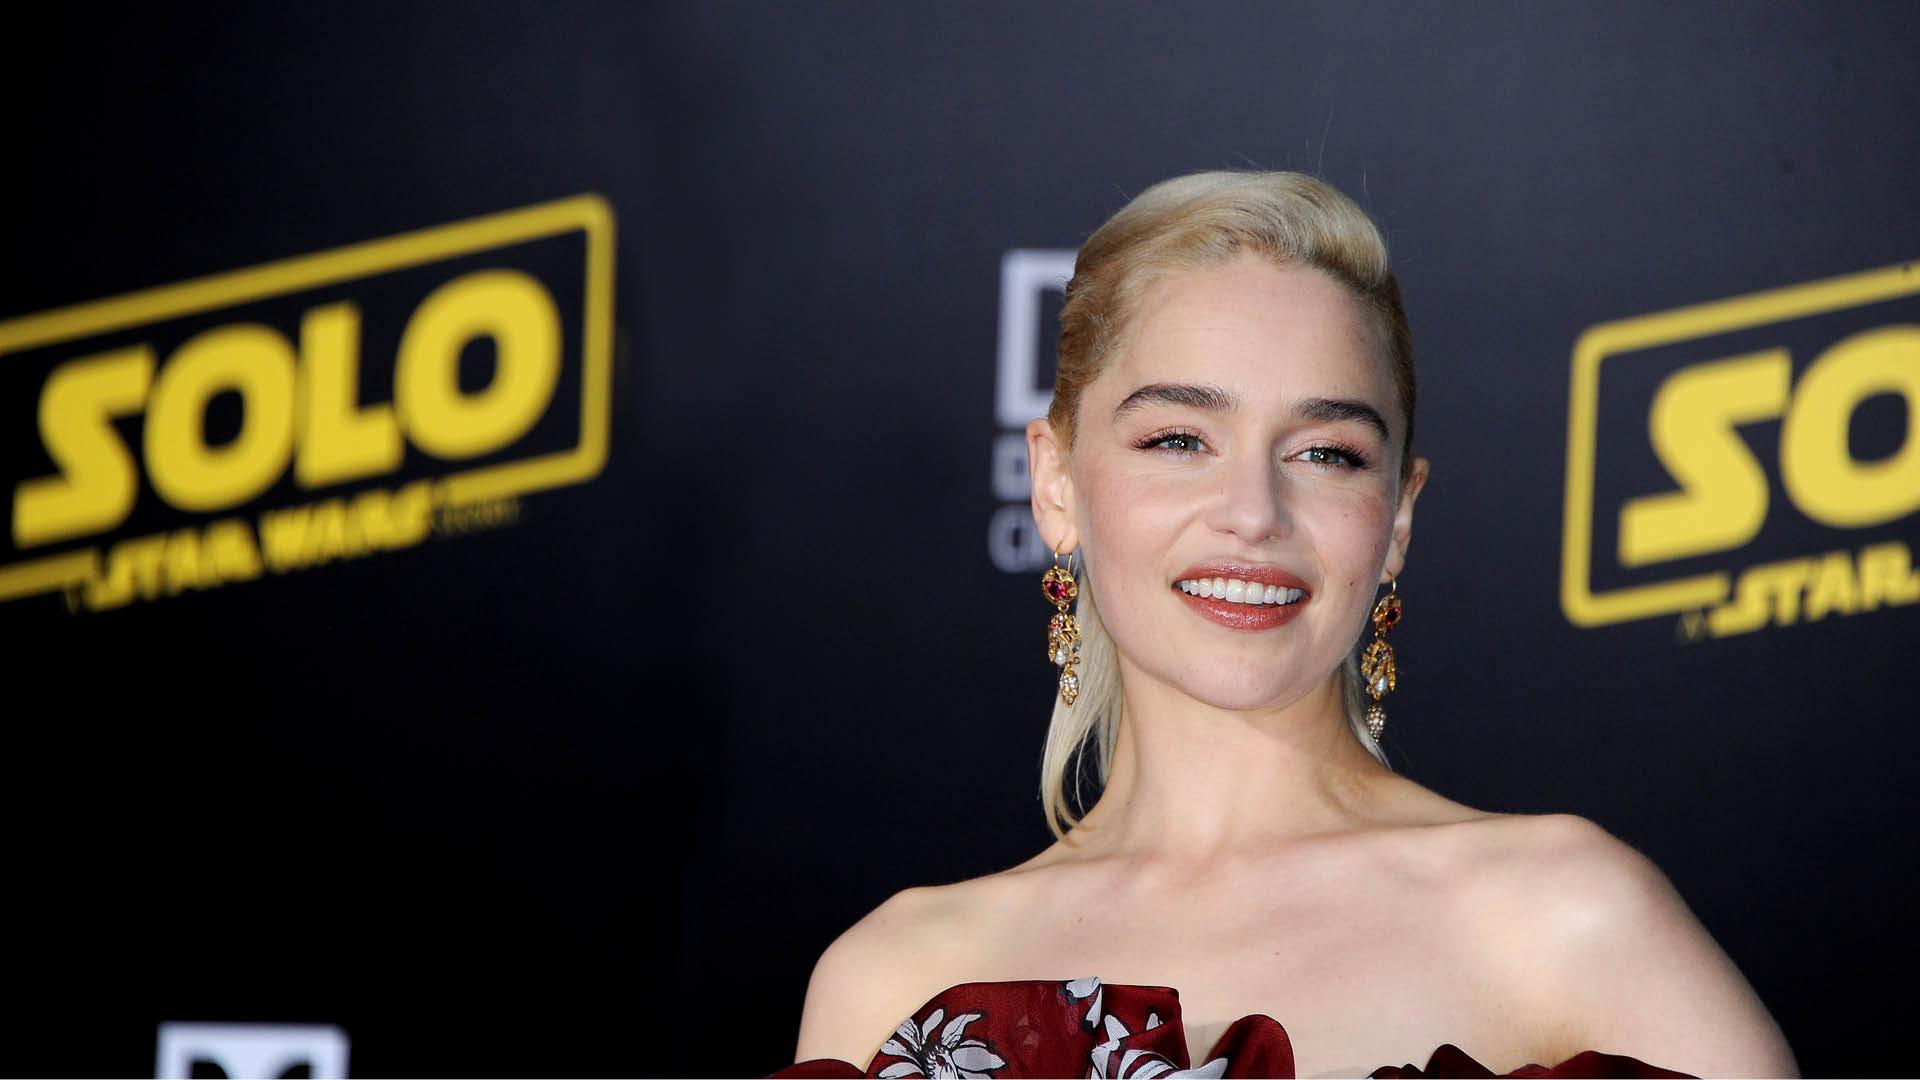 Winter Has Finally Come” As GOT Actress Emilia Clarke Rings